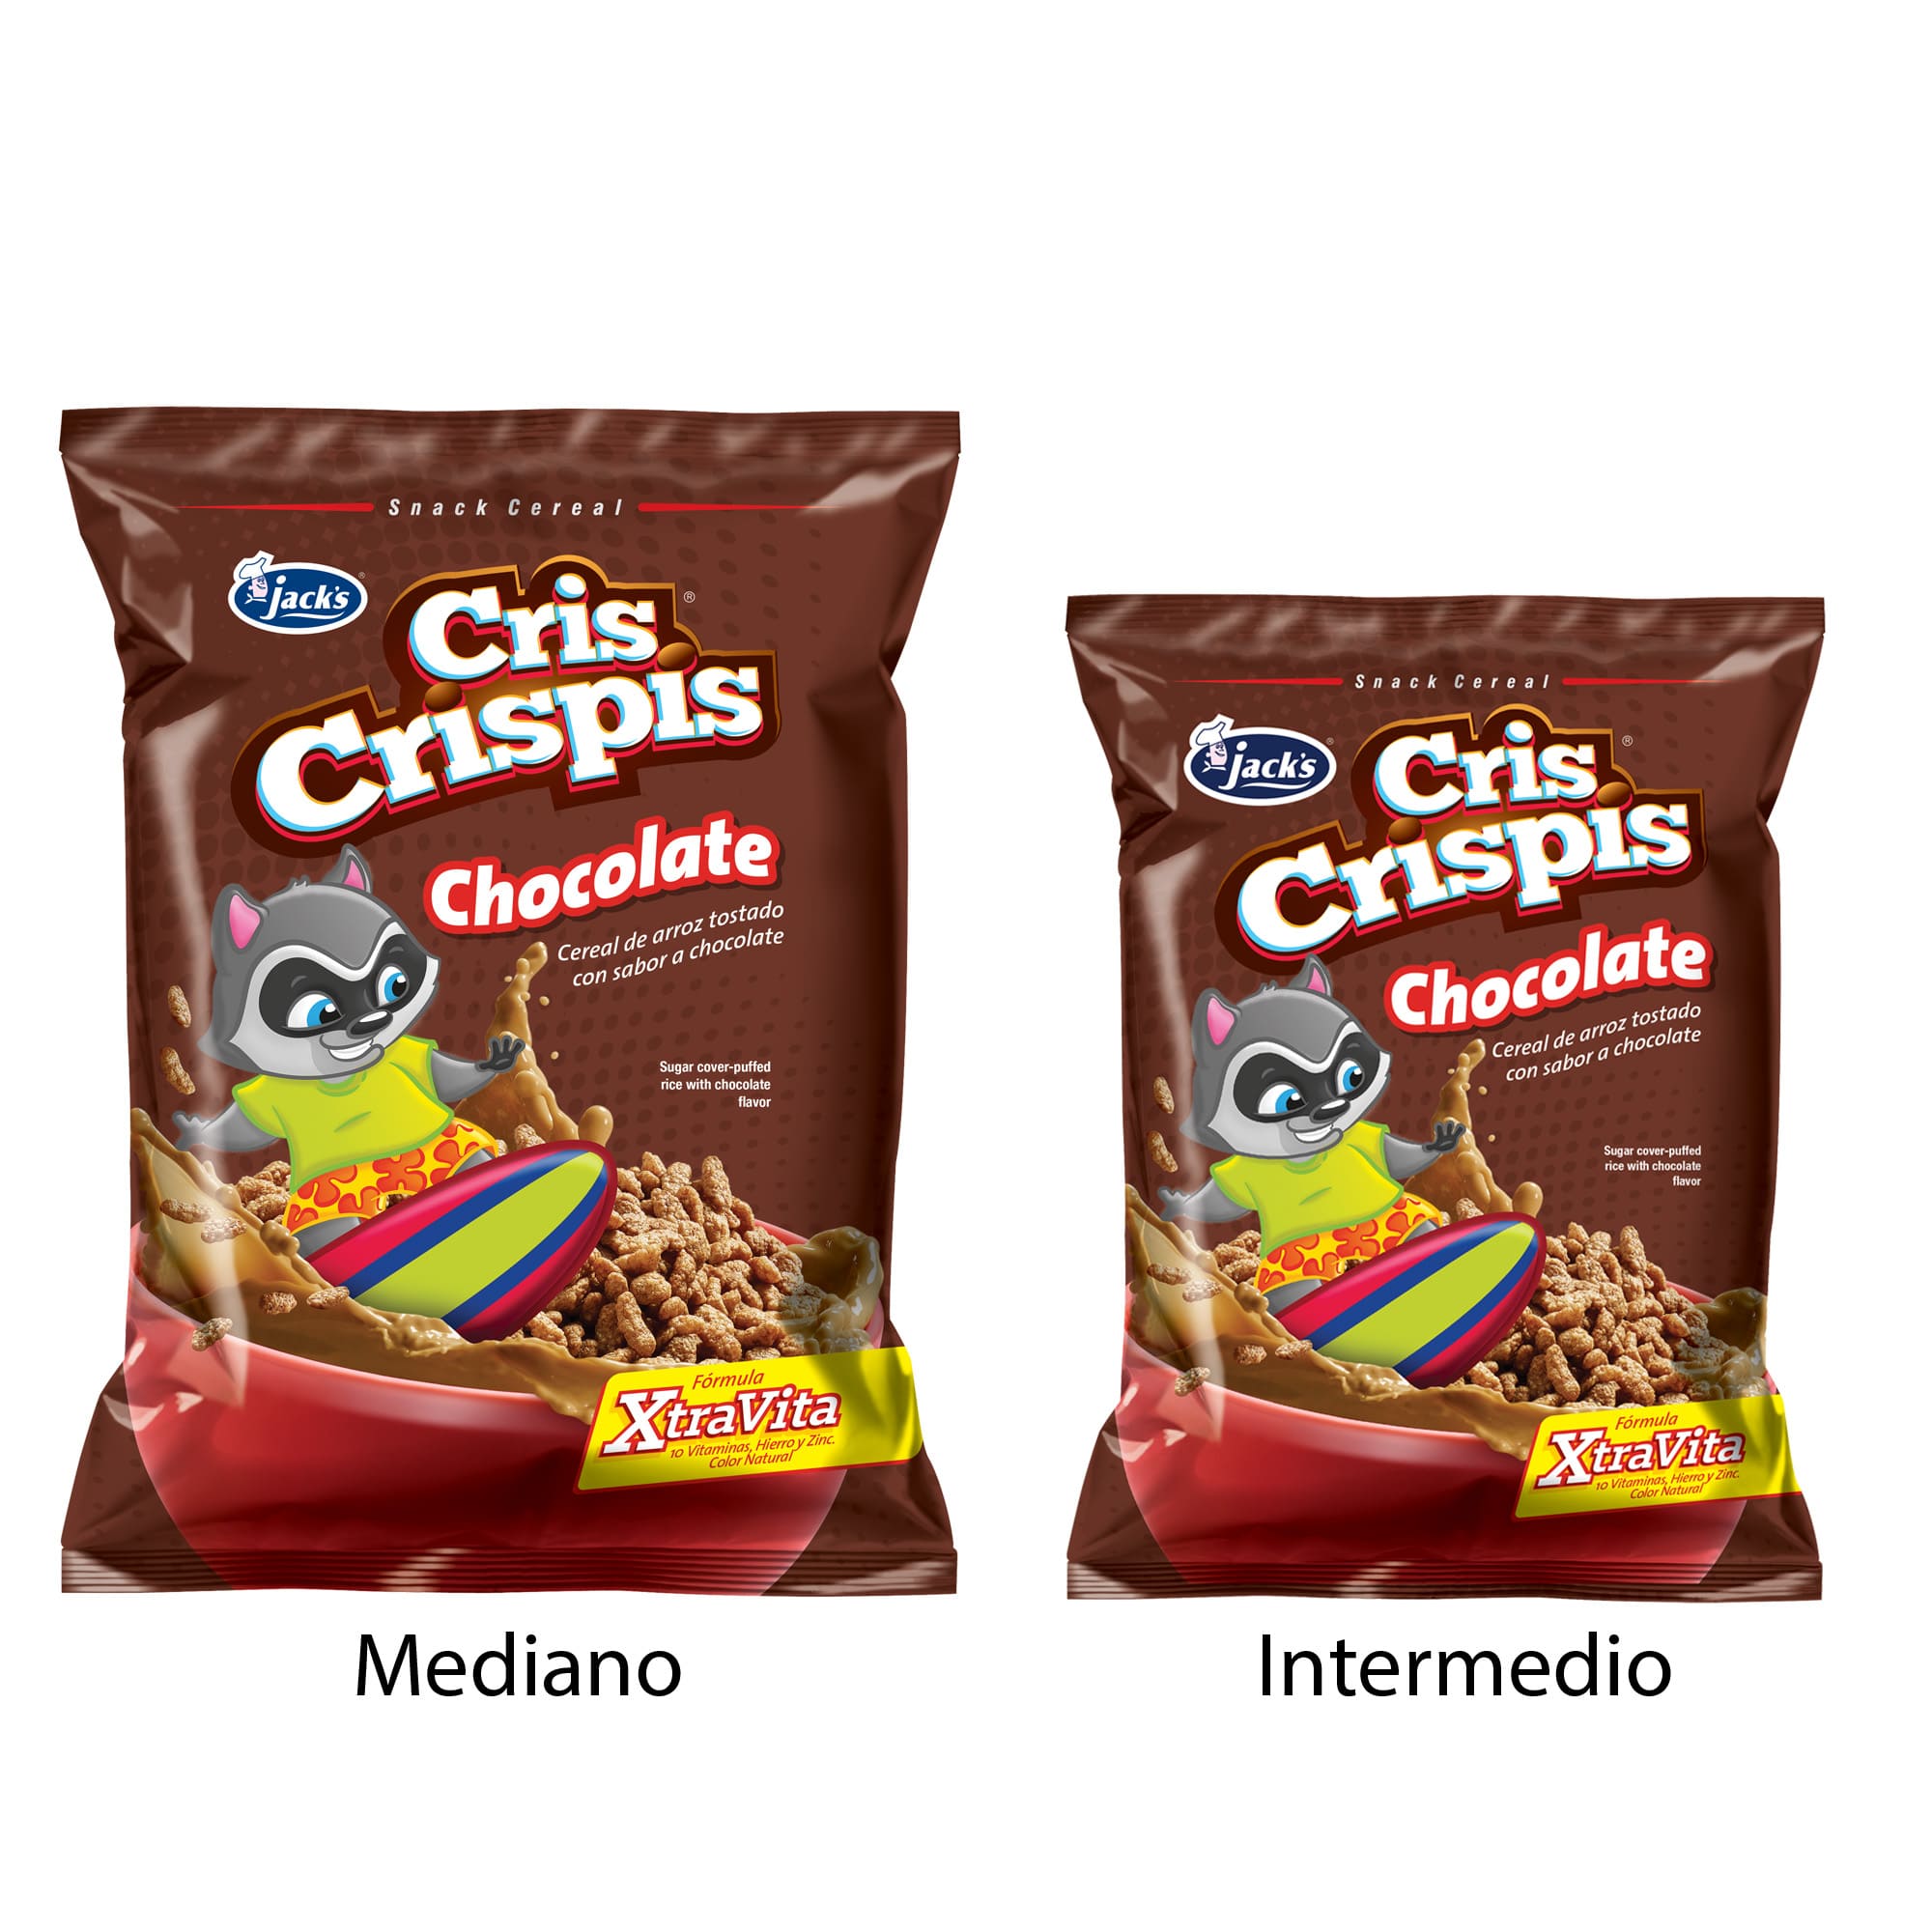 CRIS CRISPIS CHOC cereales presentac pag web